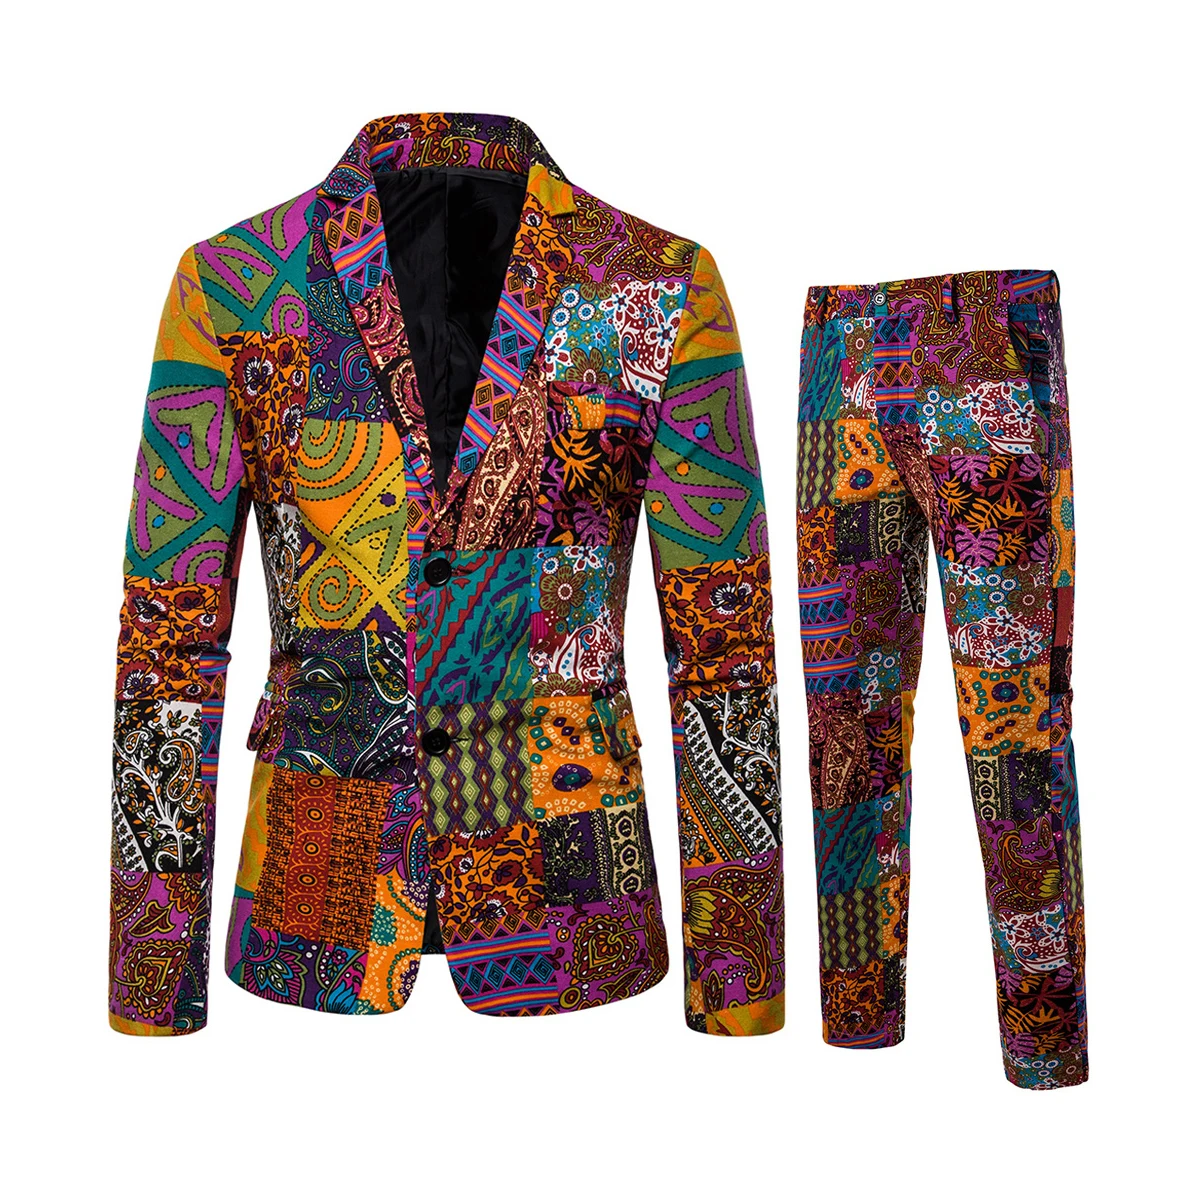 

FEGKZLI 2 Piece Mens Suits National Style Men's Wedding Suit Slim Fit African Bohemian Blazer+Pants for Party Business